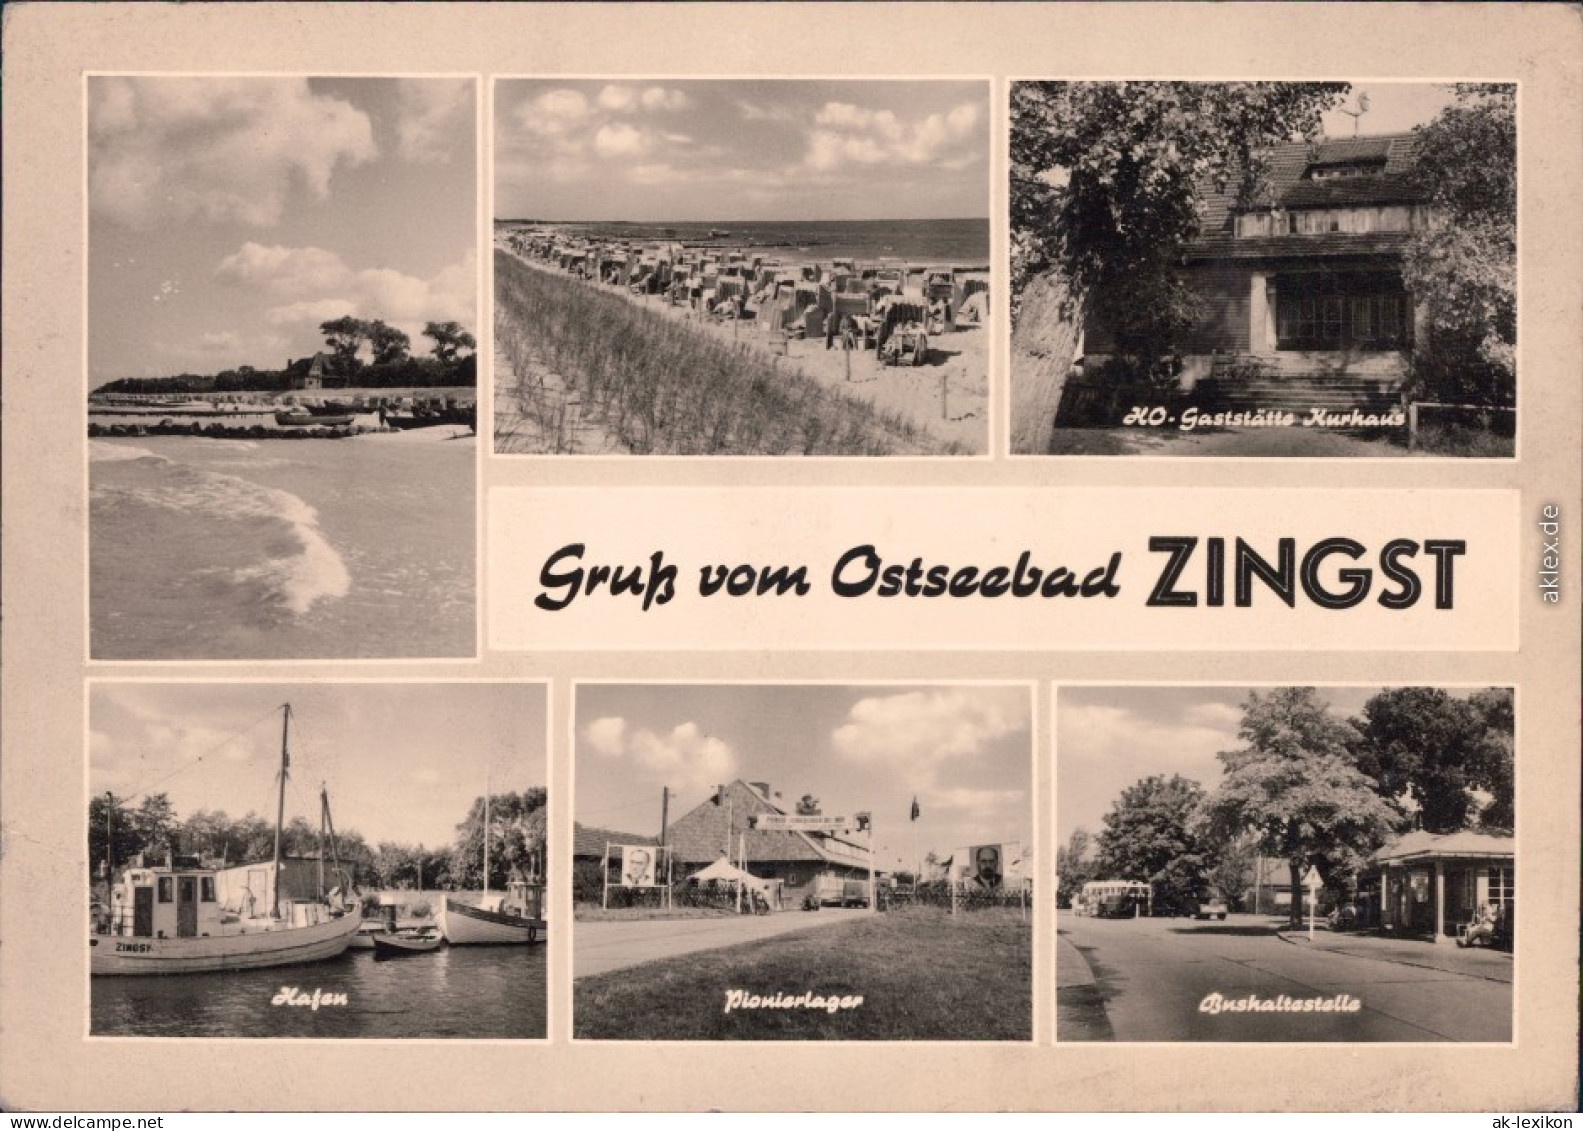 Zingst Darss Strand  HO-Gaststätte  Hafen, Pionierlager, Bushaltestelle 1963 - Zingst